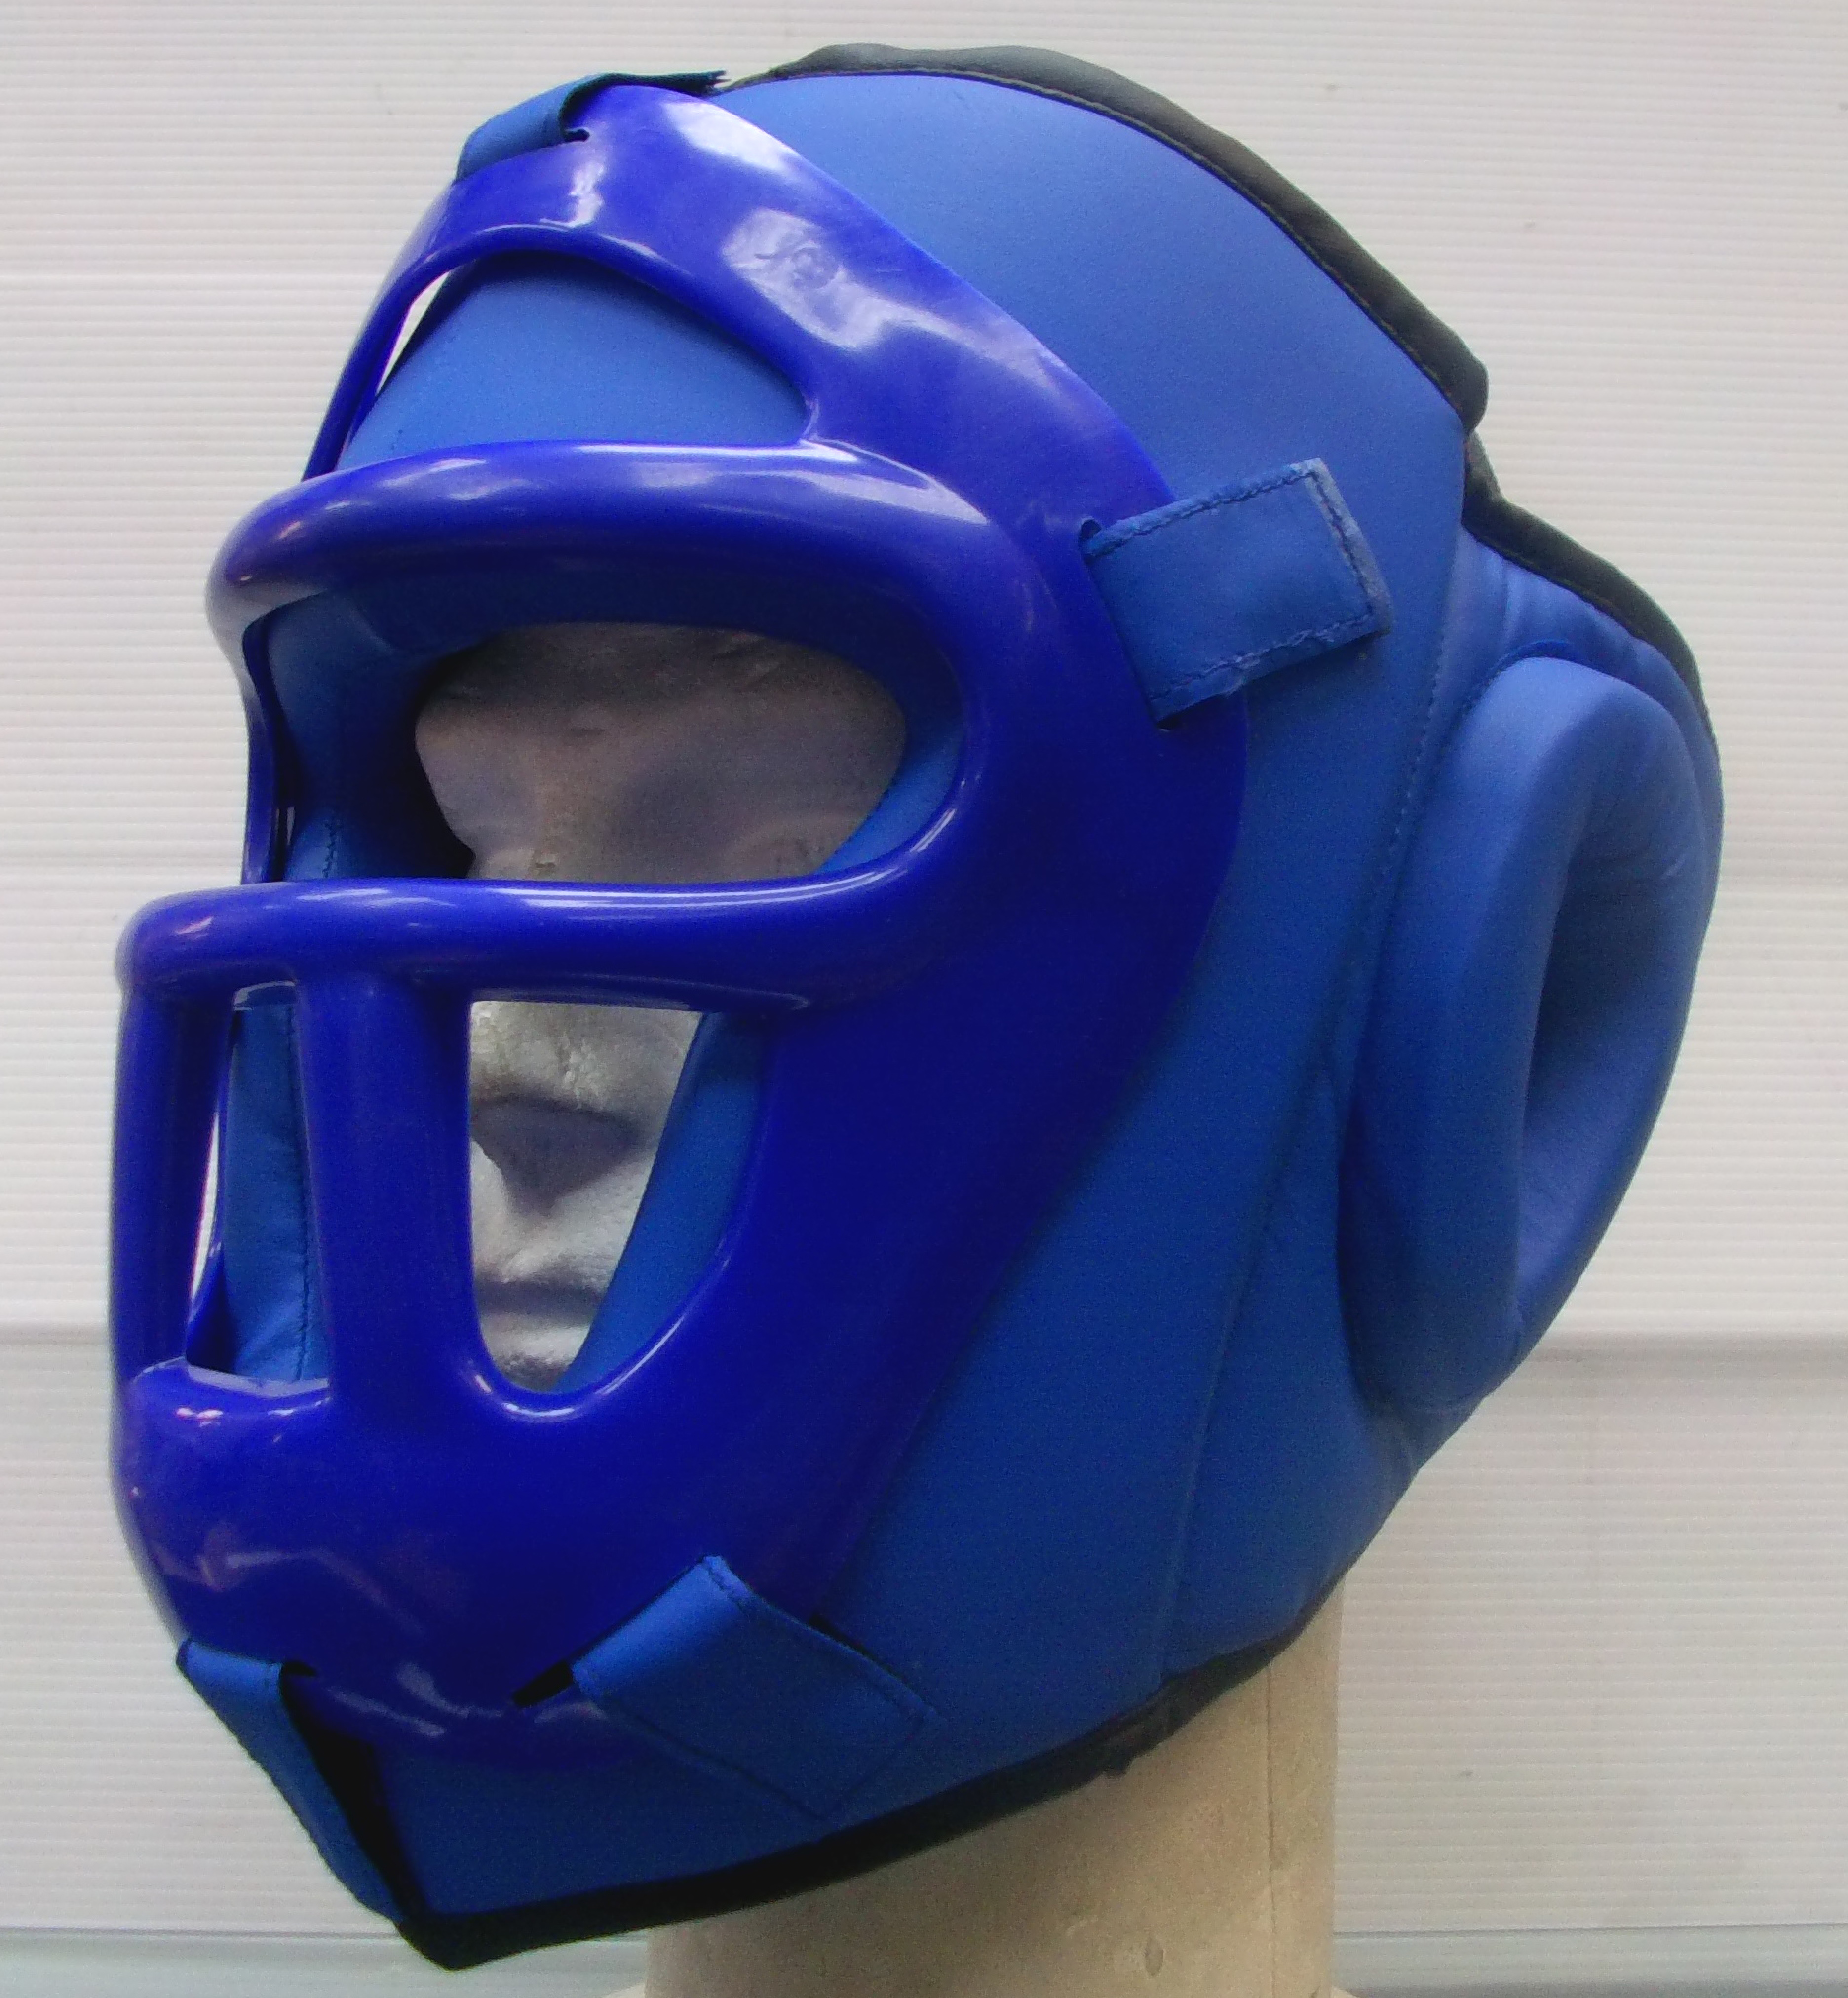 Head Guard Boxing MMA Martial Arts Kick Boxing Headgear with Face Protector Blue